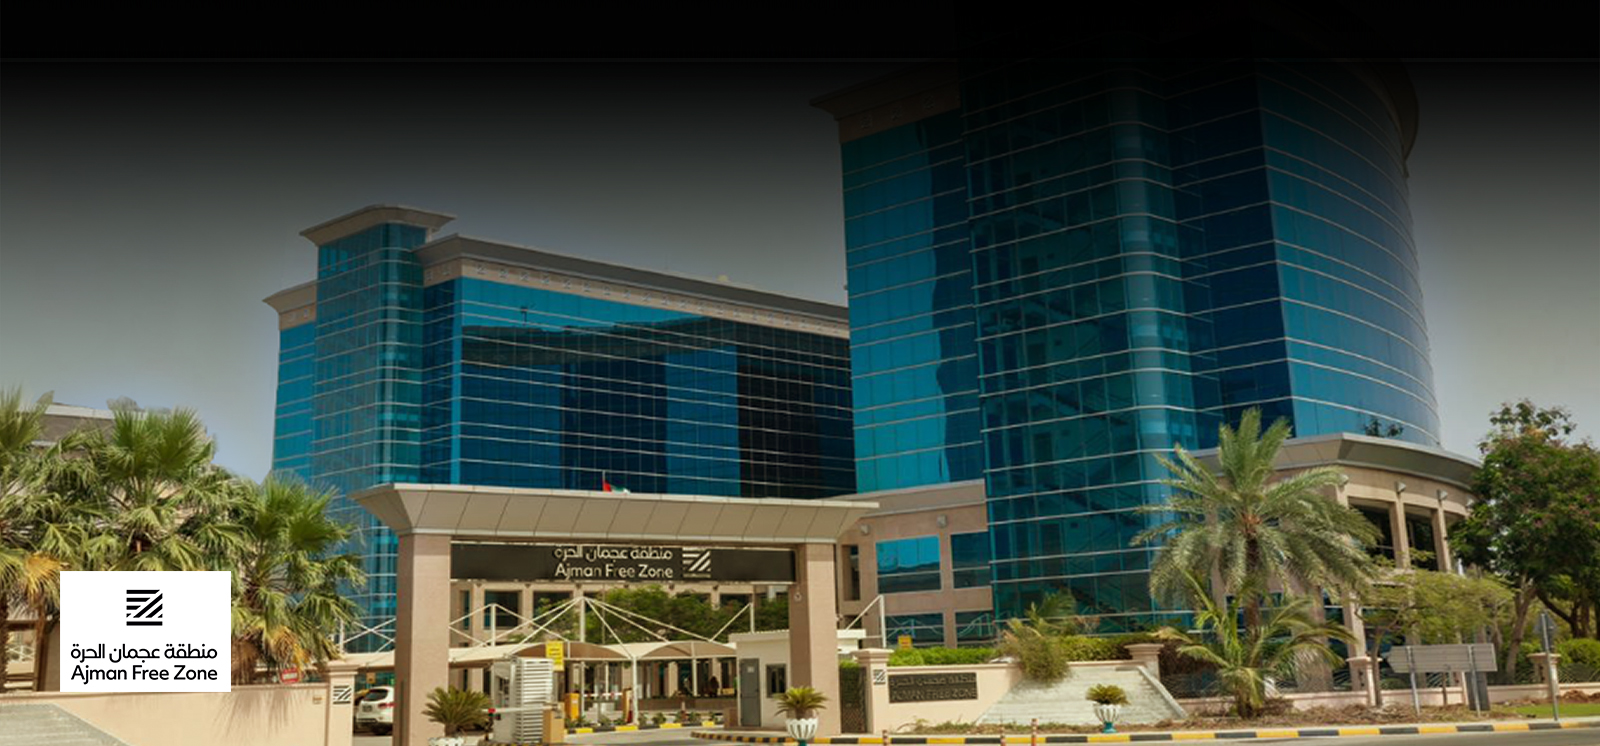 Free zone in Ajman (afza): strategic location to do business in UAE